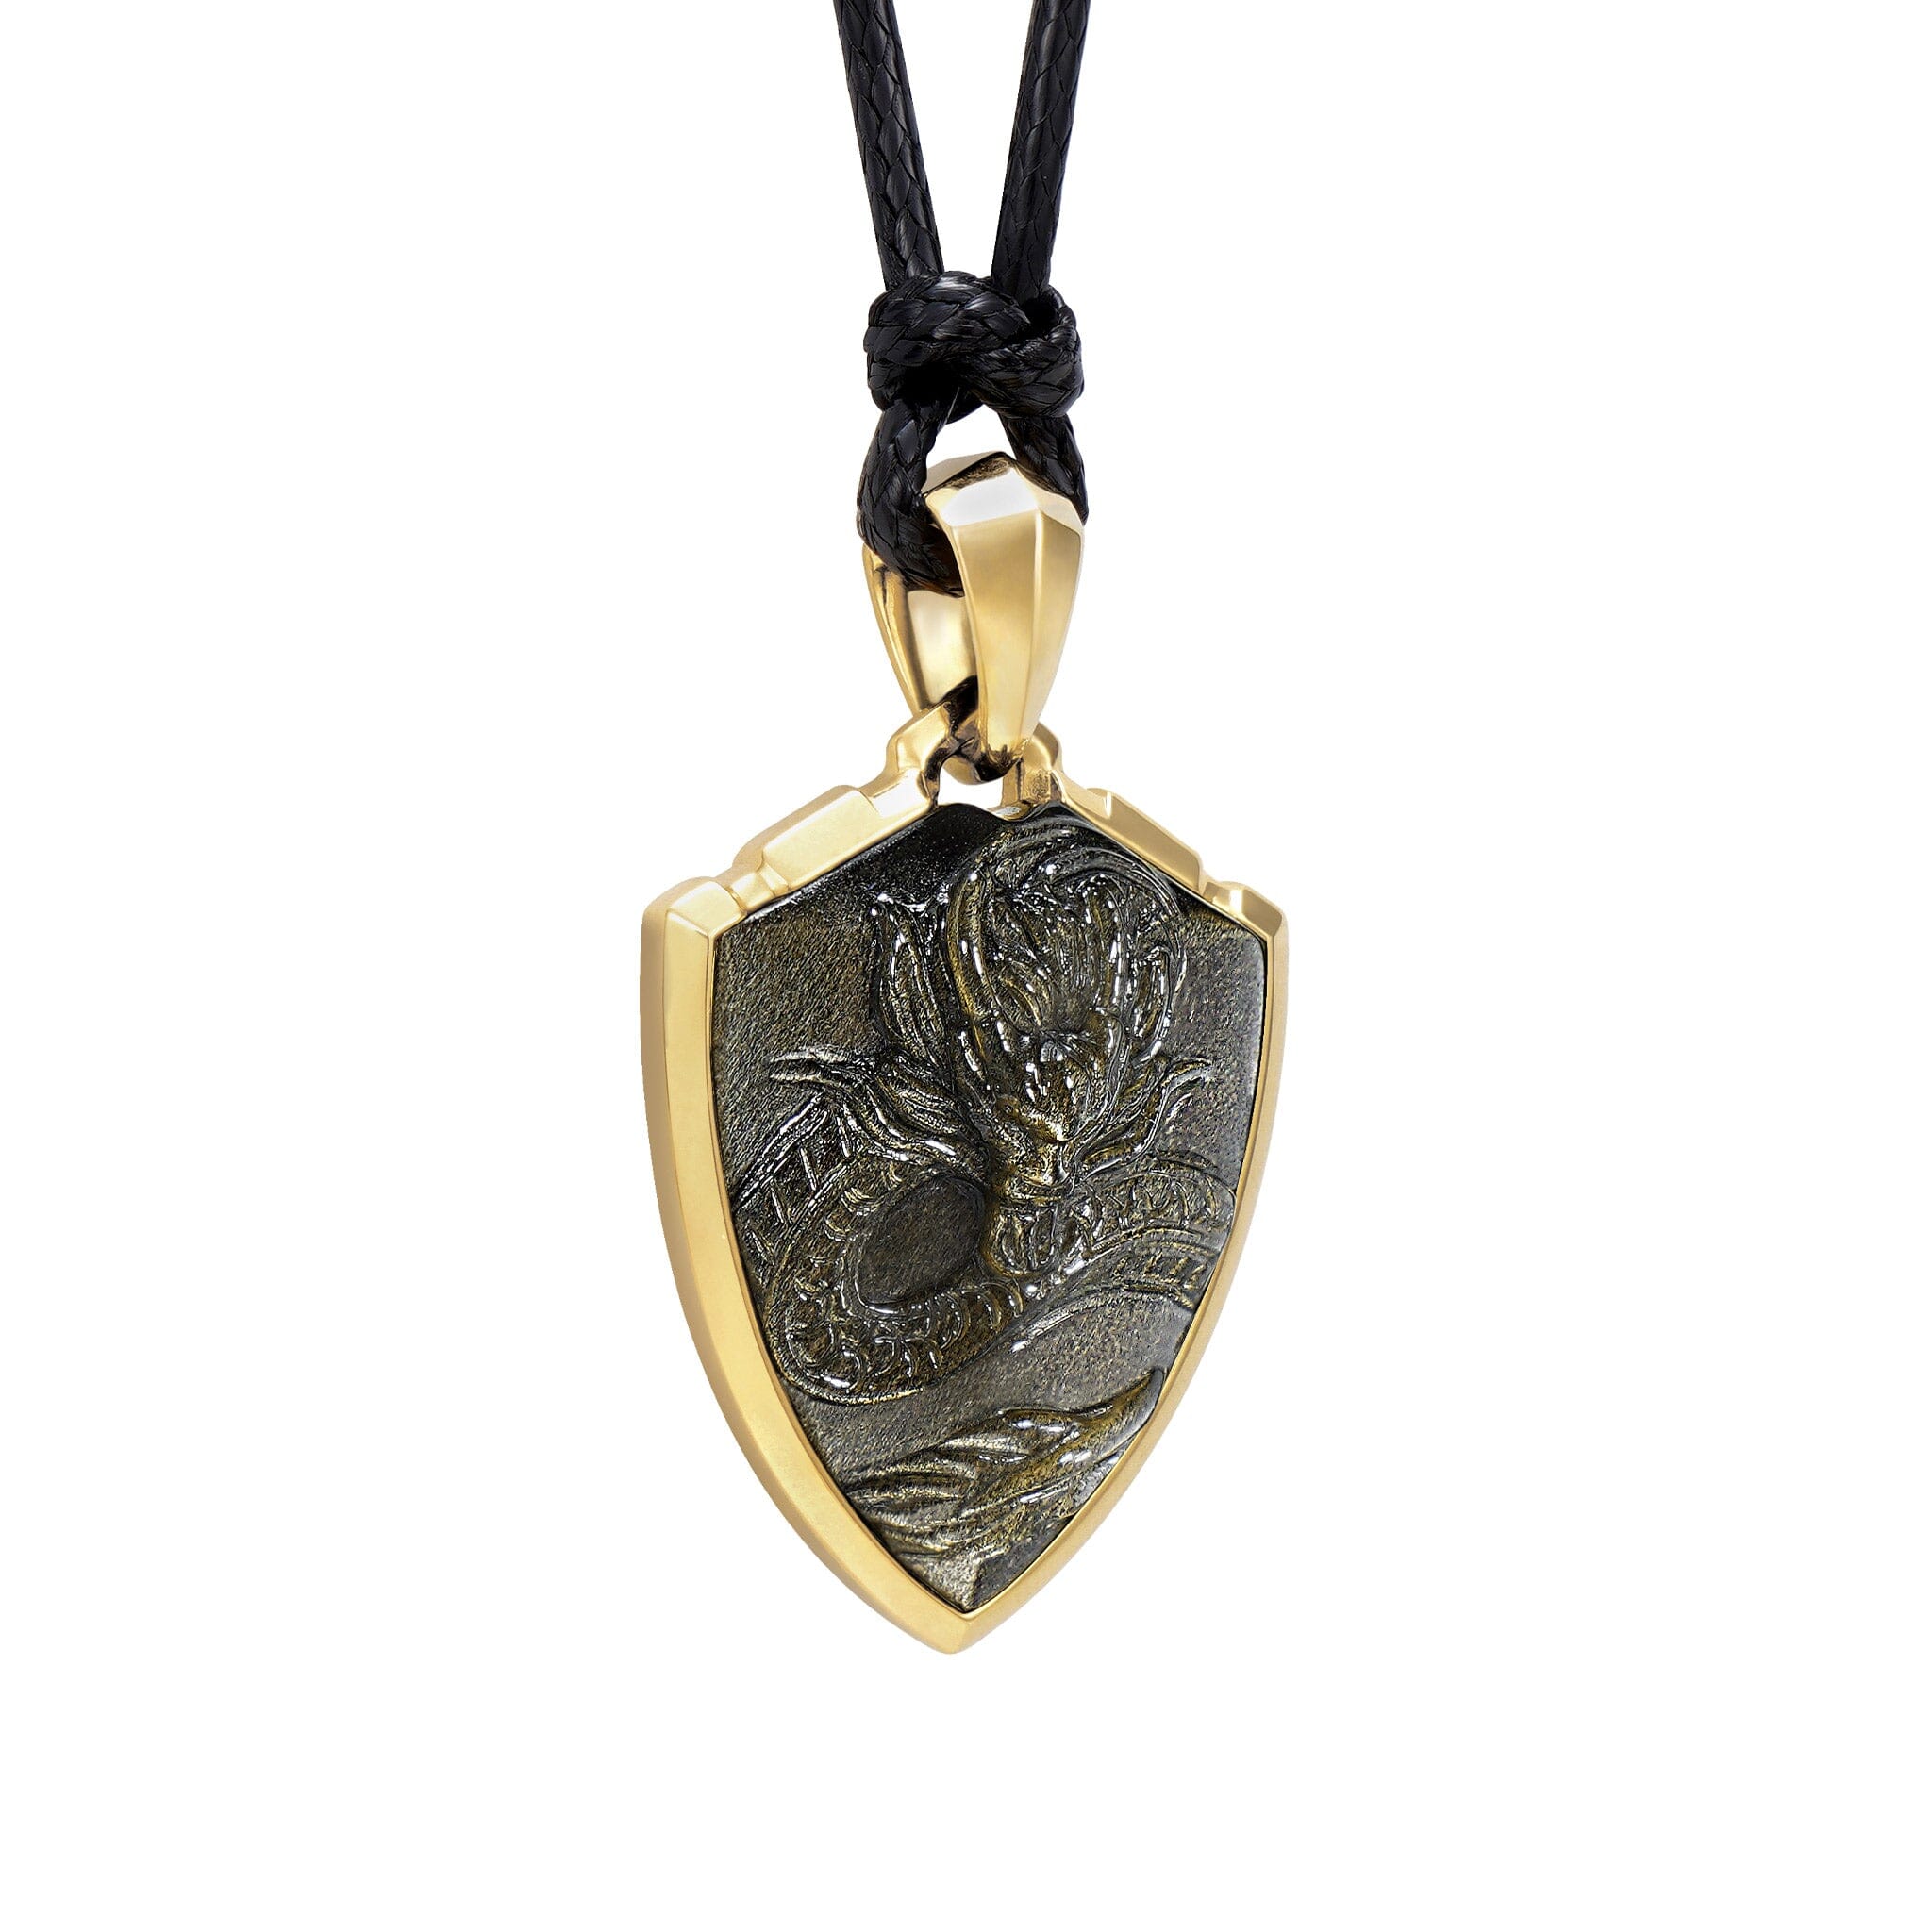 Golden Obsidian Dragon Pendant Necklace Necklaces AWNL 